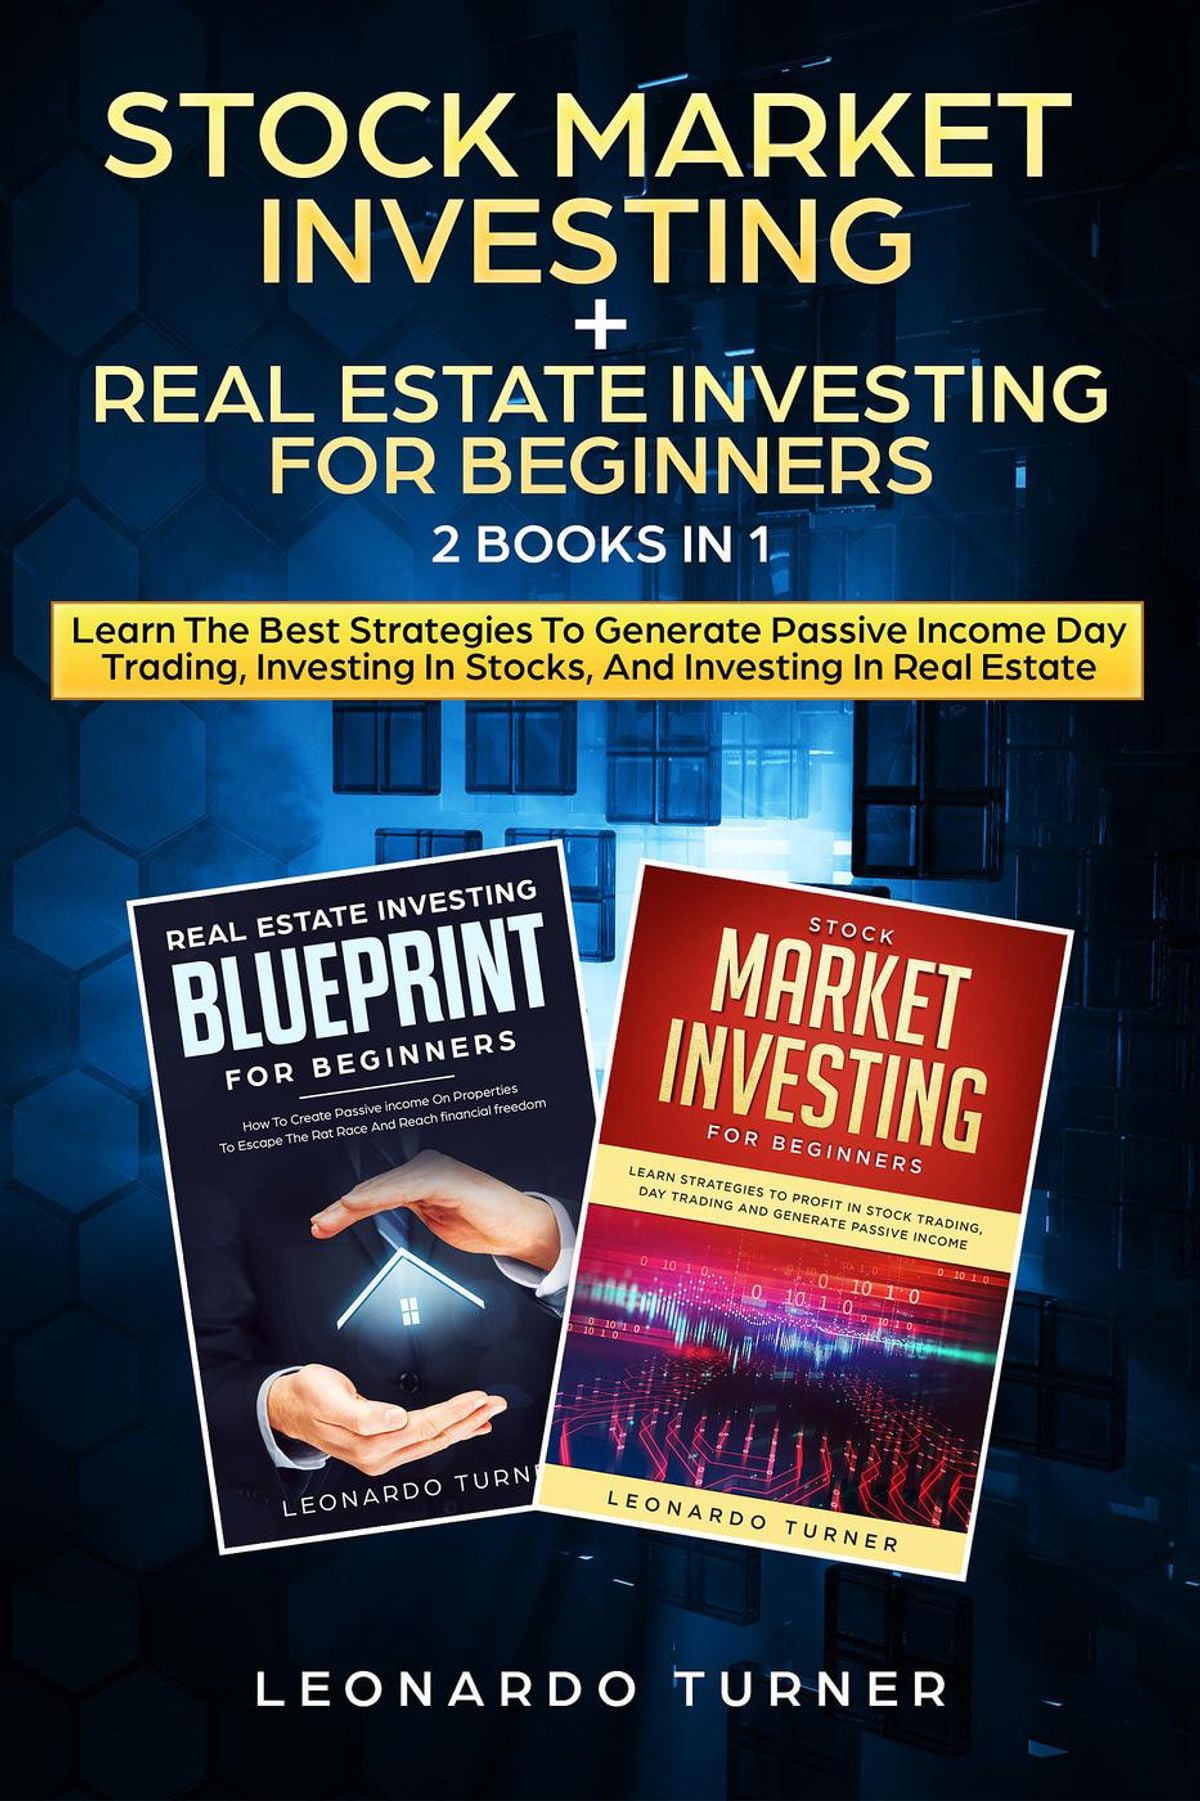 stock investing books for beginners